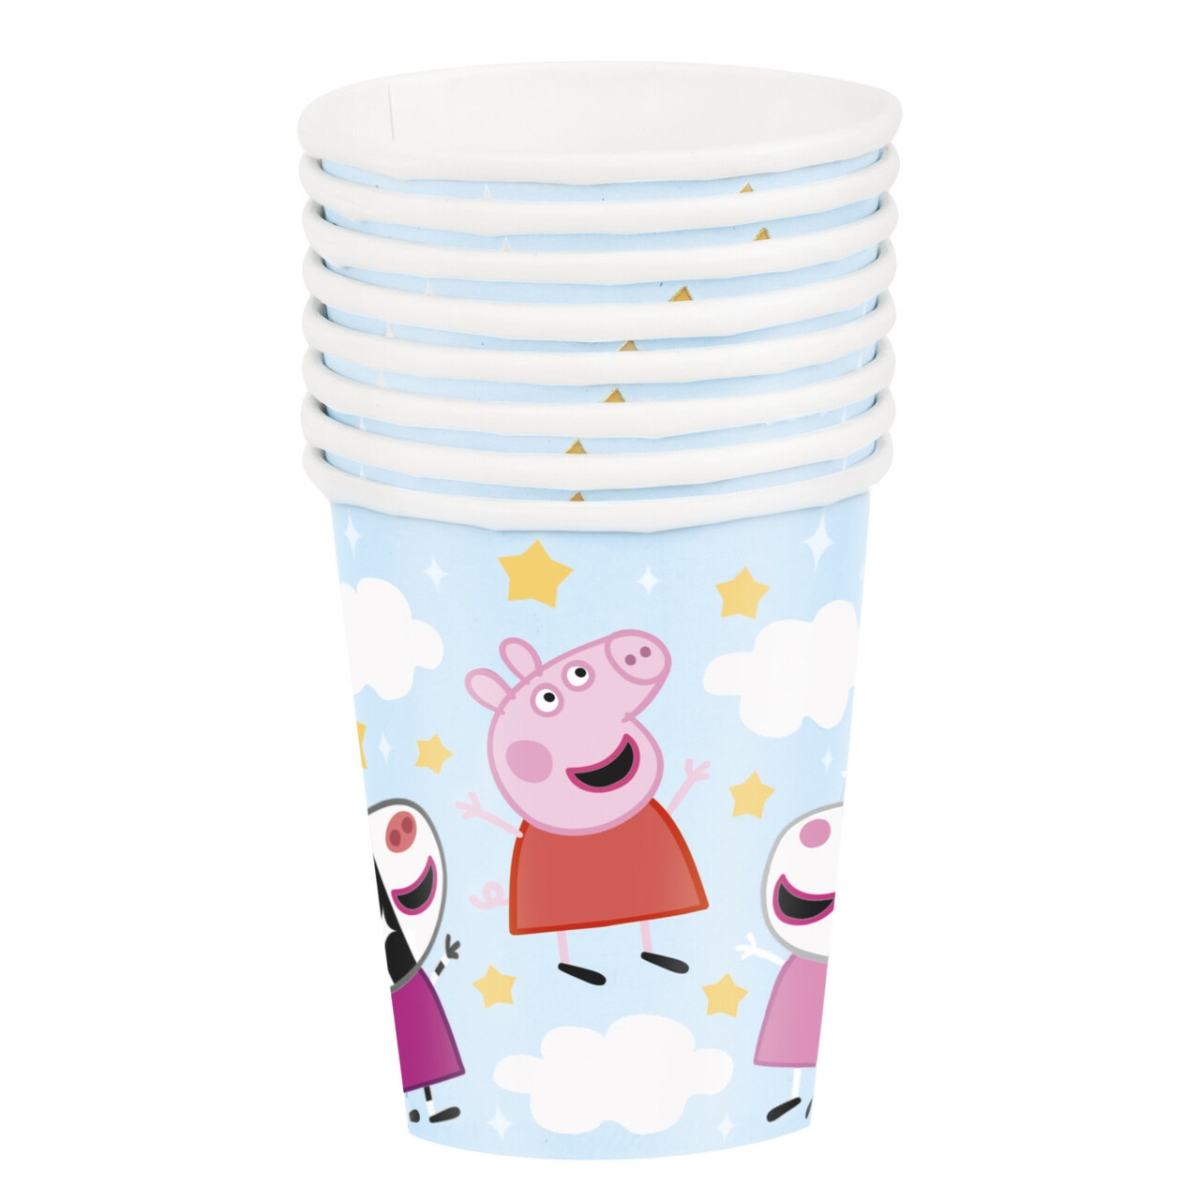 ILOVEU 9 oz Peppa Pig Paper Cups - 8 Count